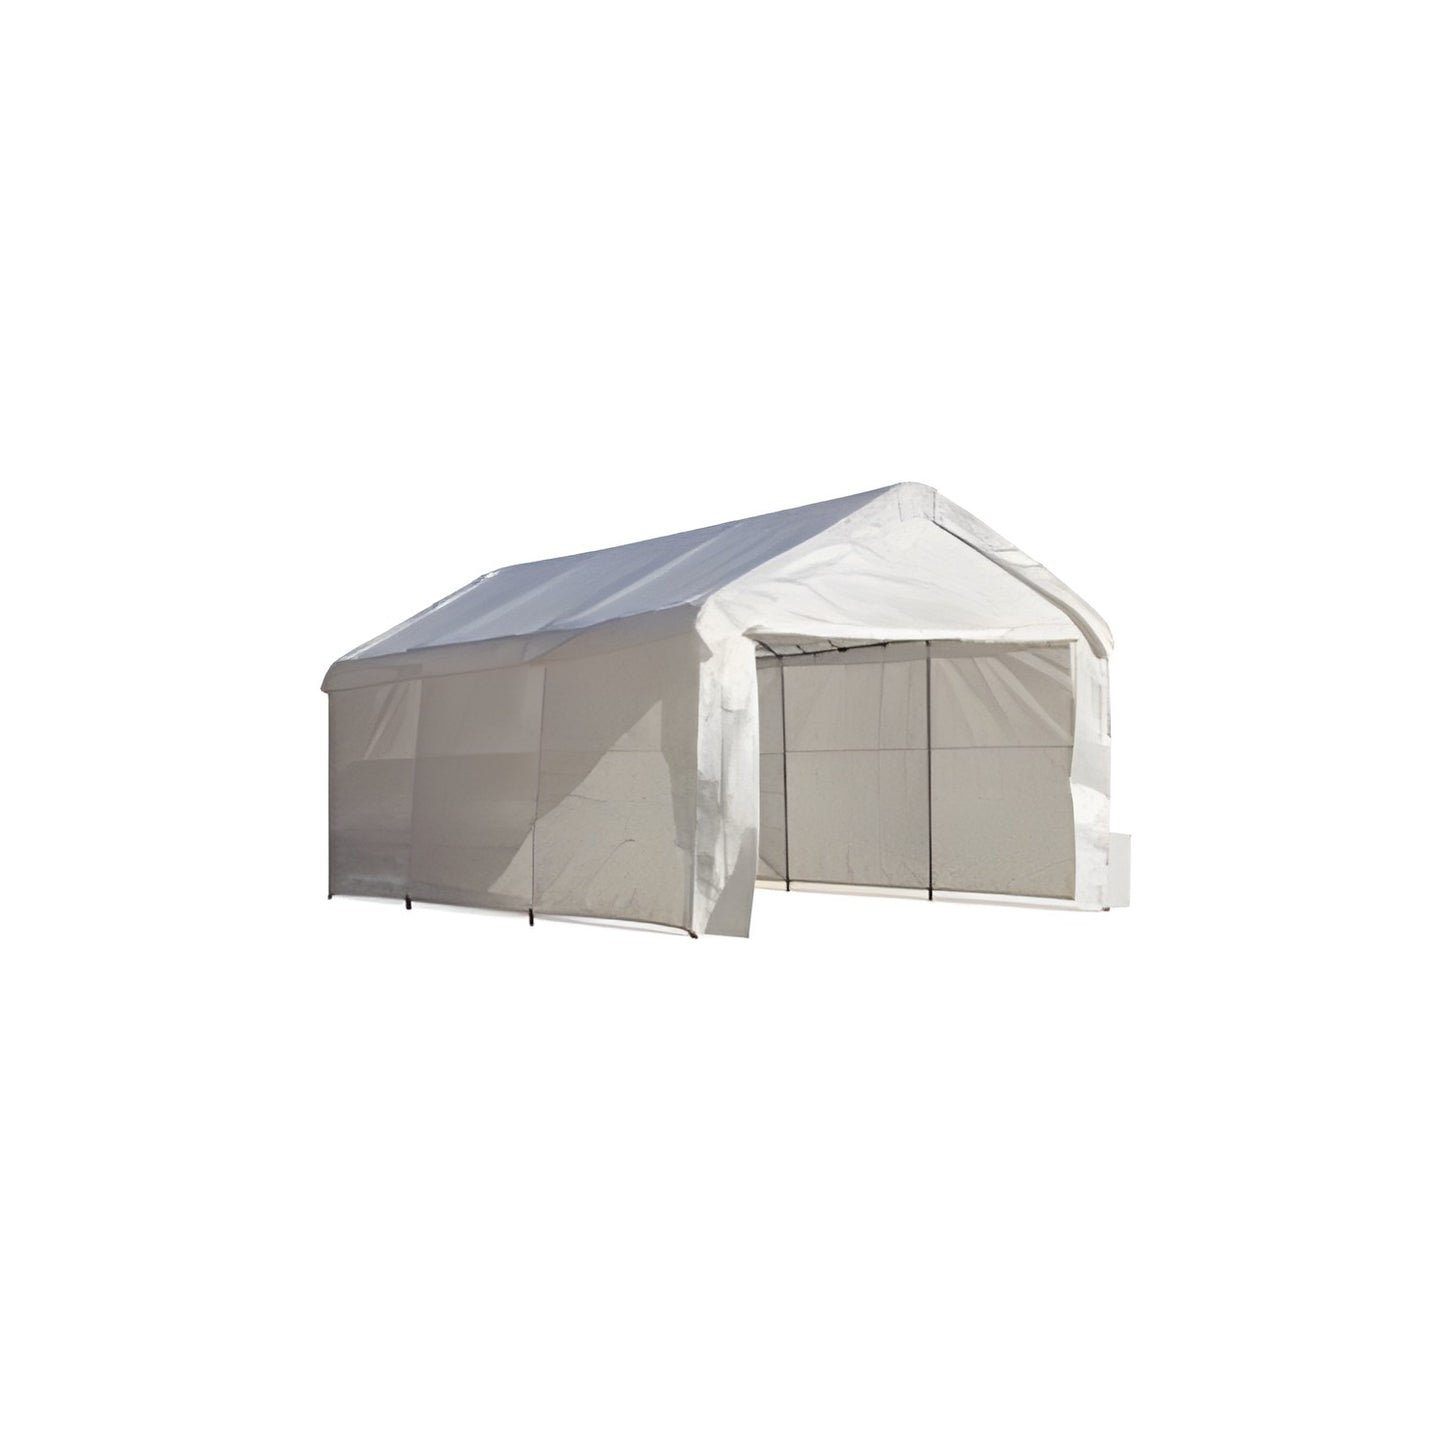 Tarp Canopy Enclosure Kit for 12' x 20' Frames